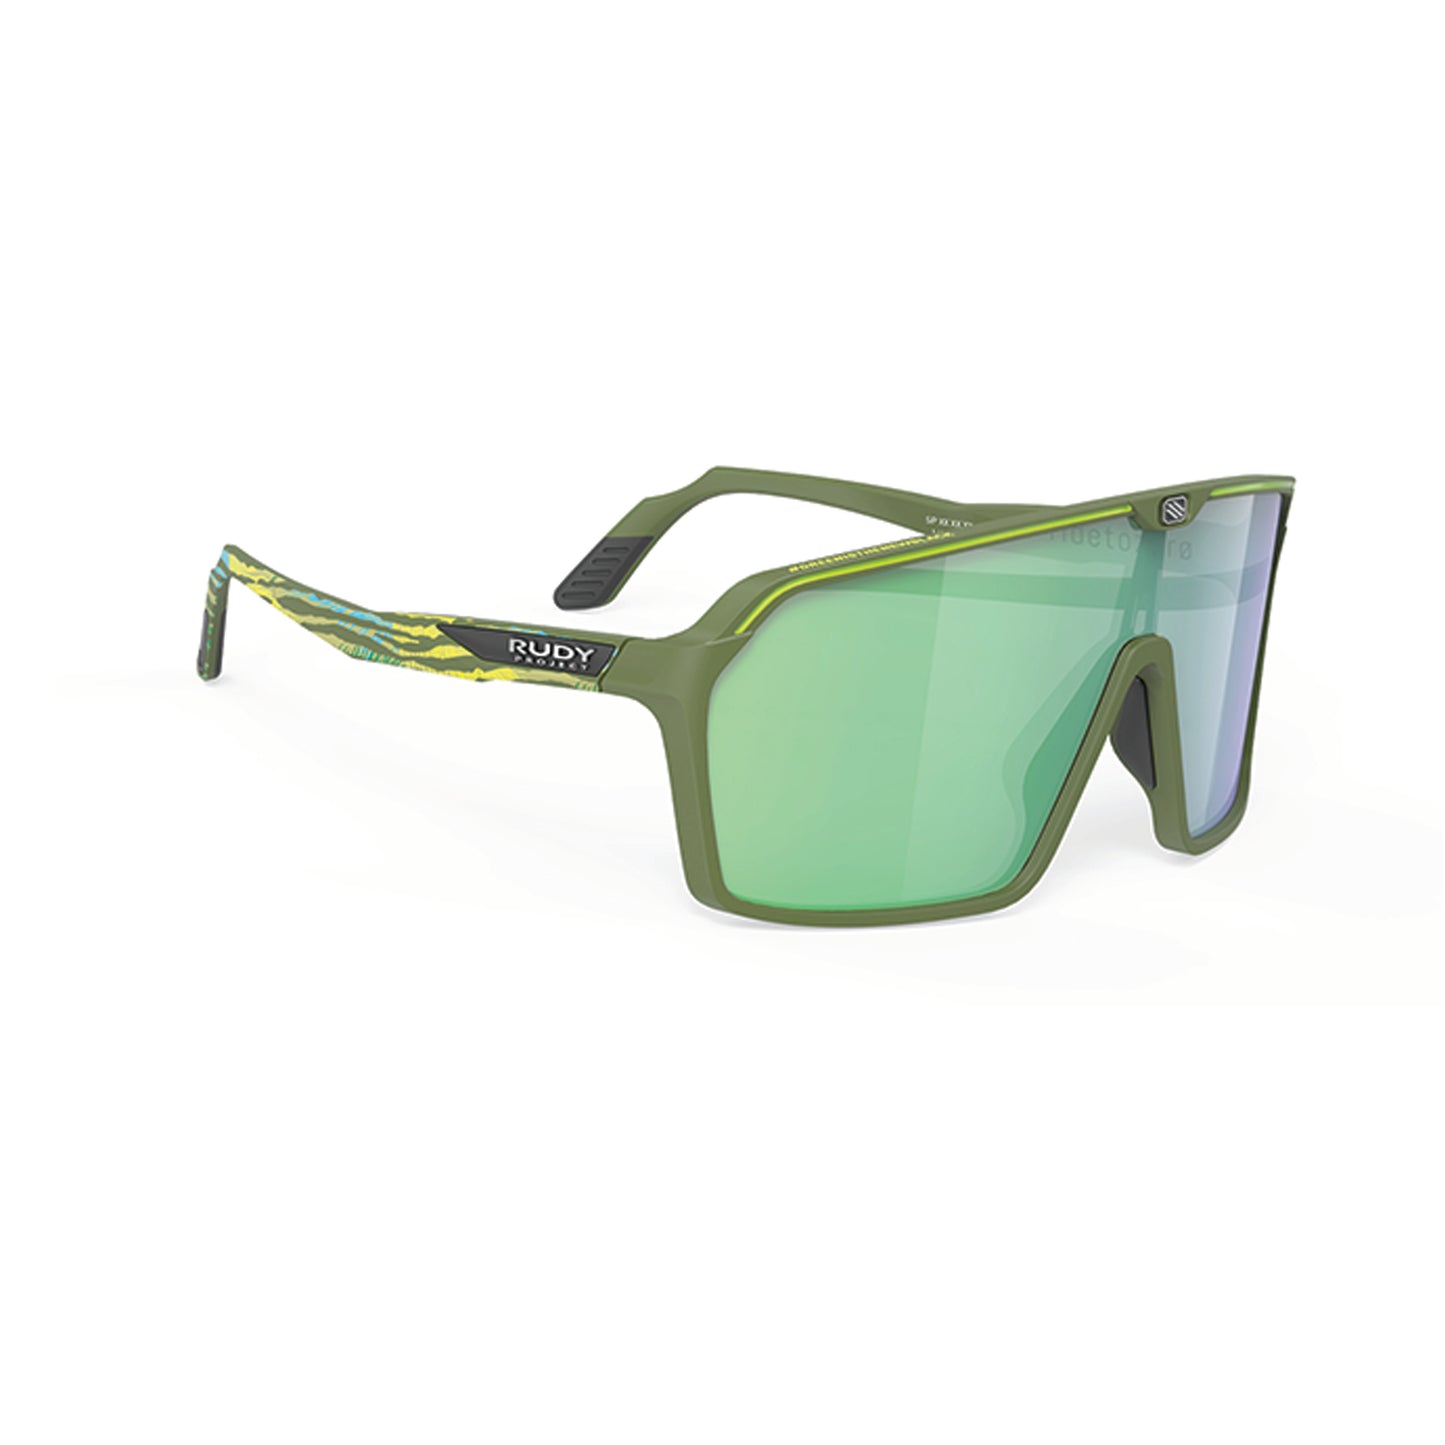 Limited Edition #GreenIsTheNewBlack Spinshield Eyewear in Olive Matte-Multilaser Green Lens